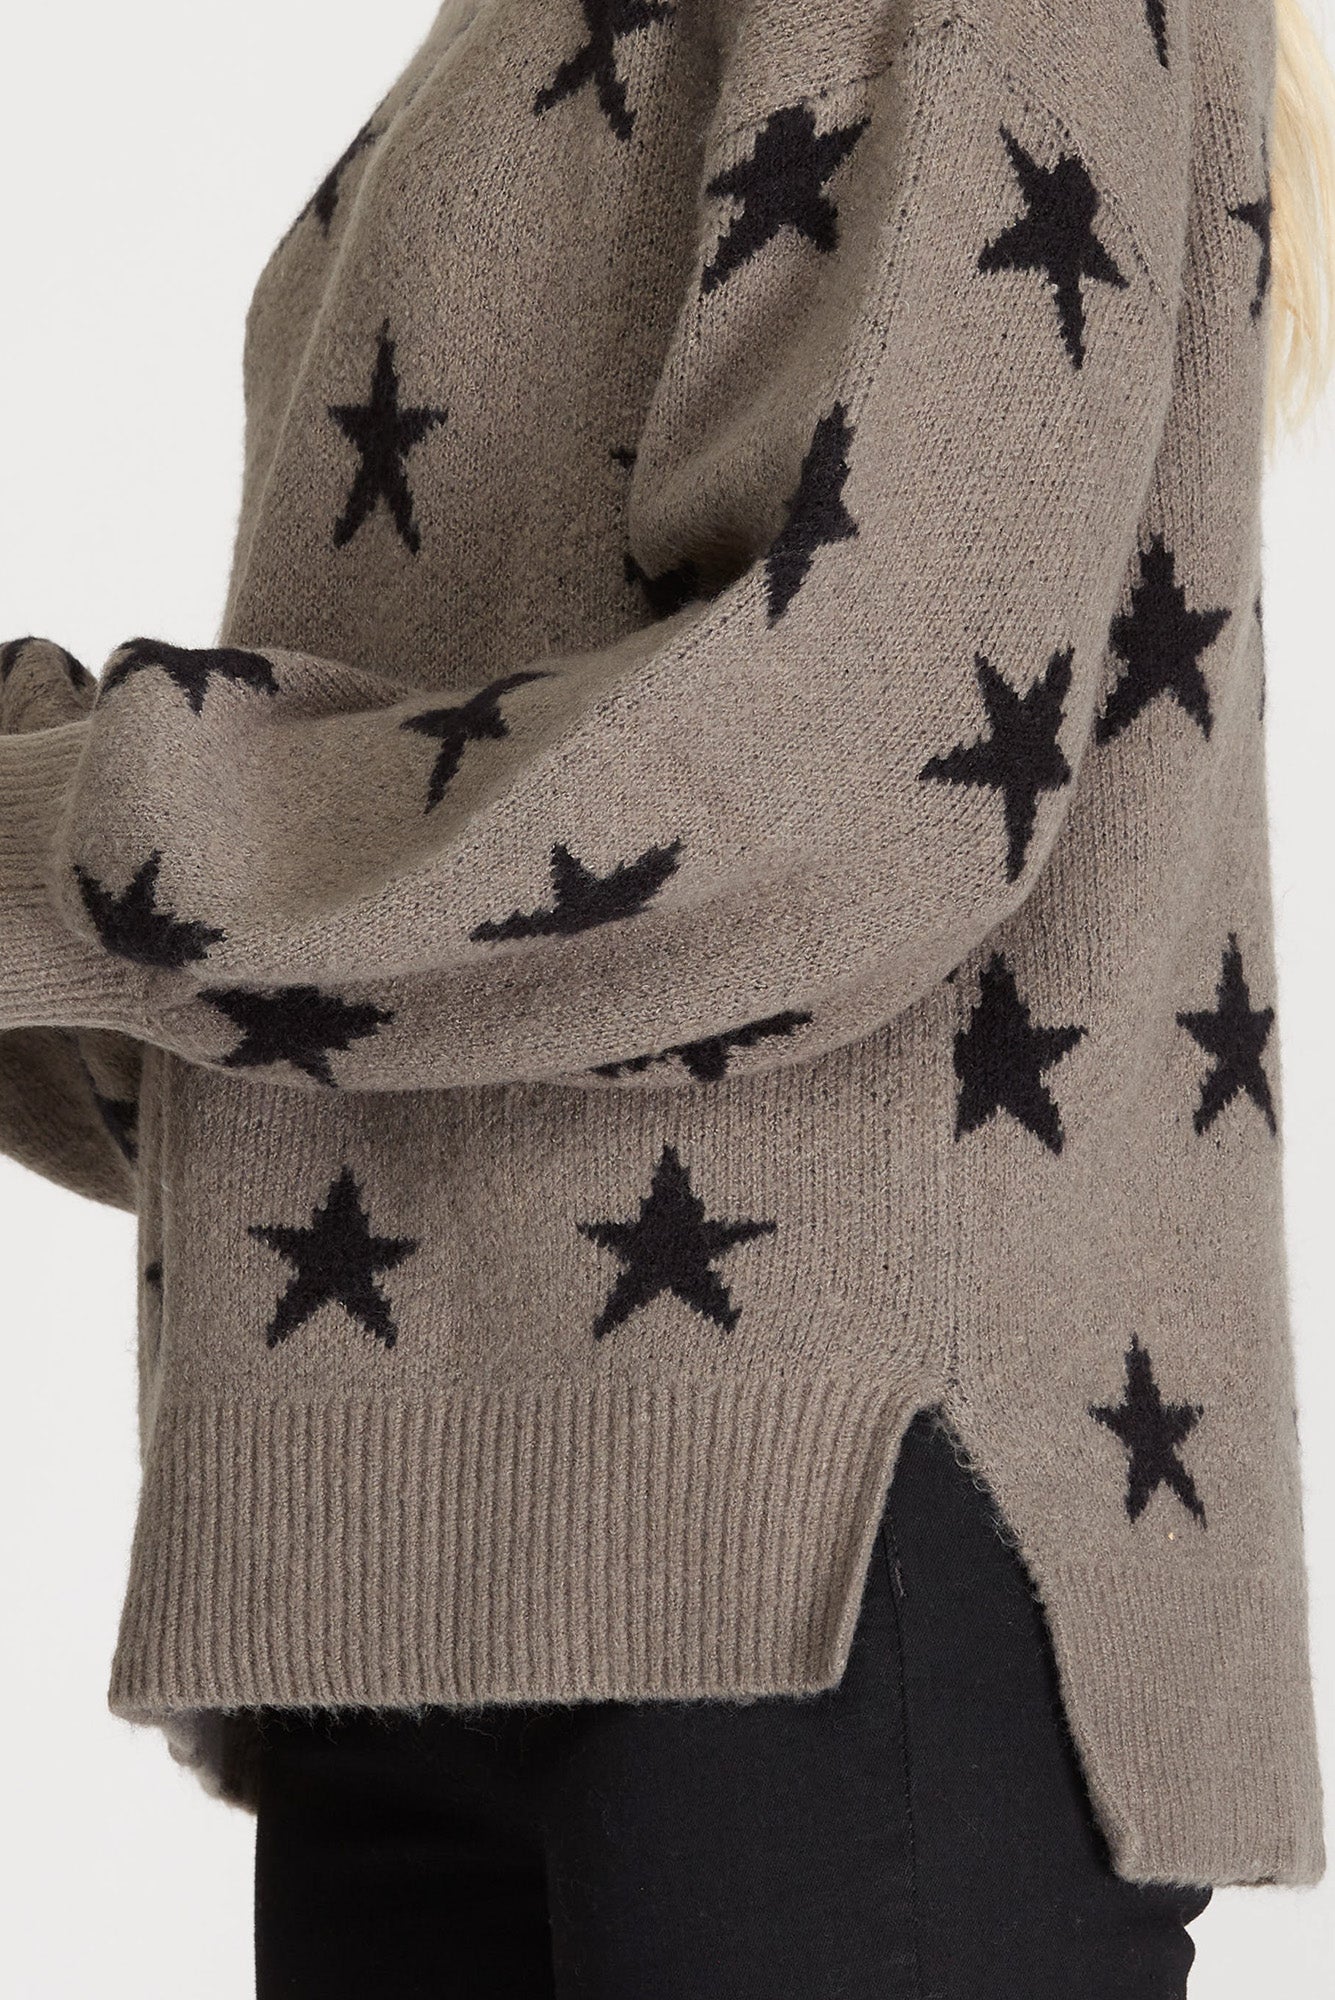 Olive Gray V-Neck Star Sweater